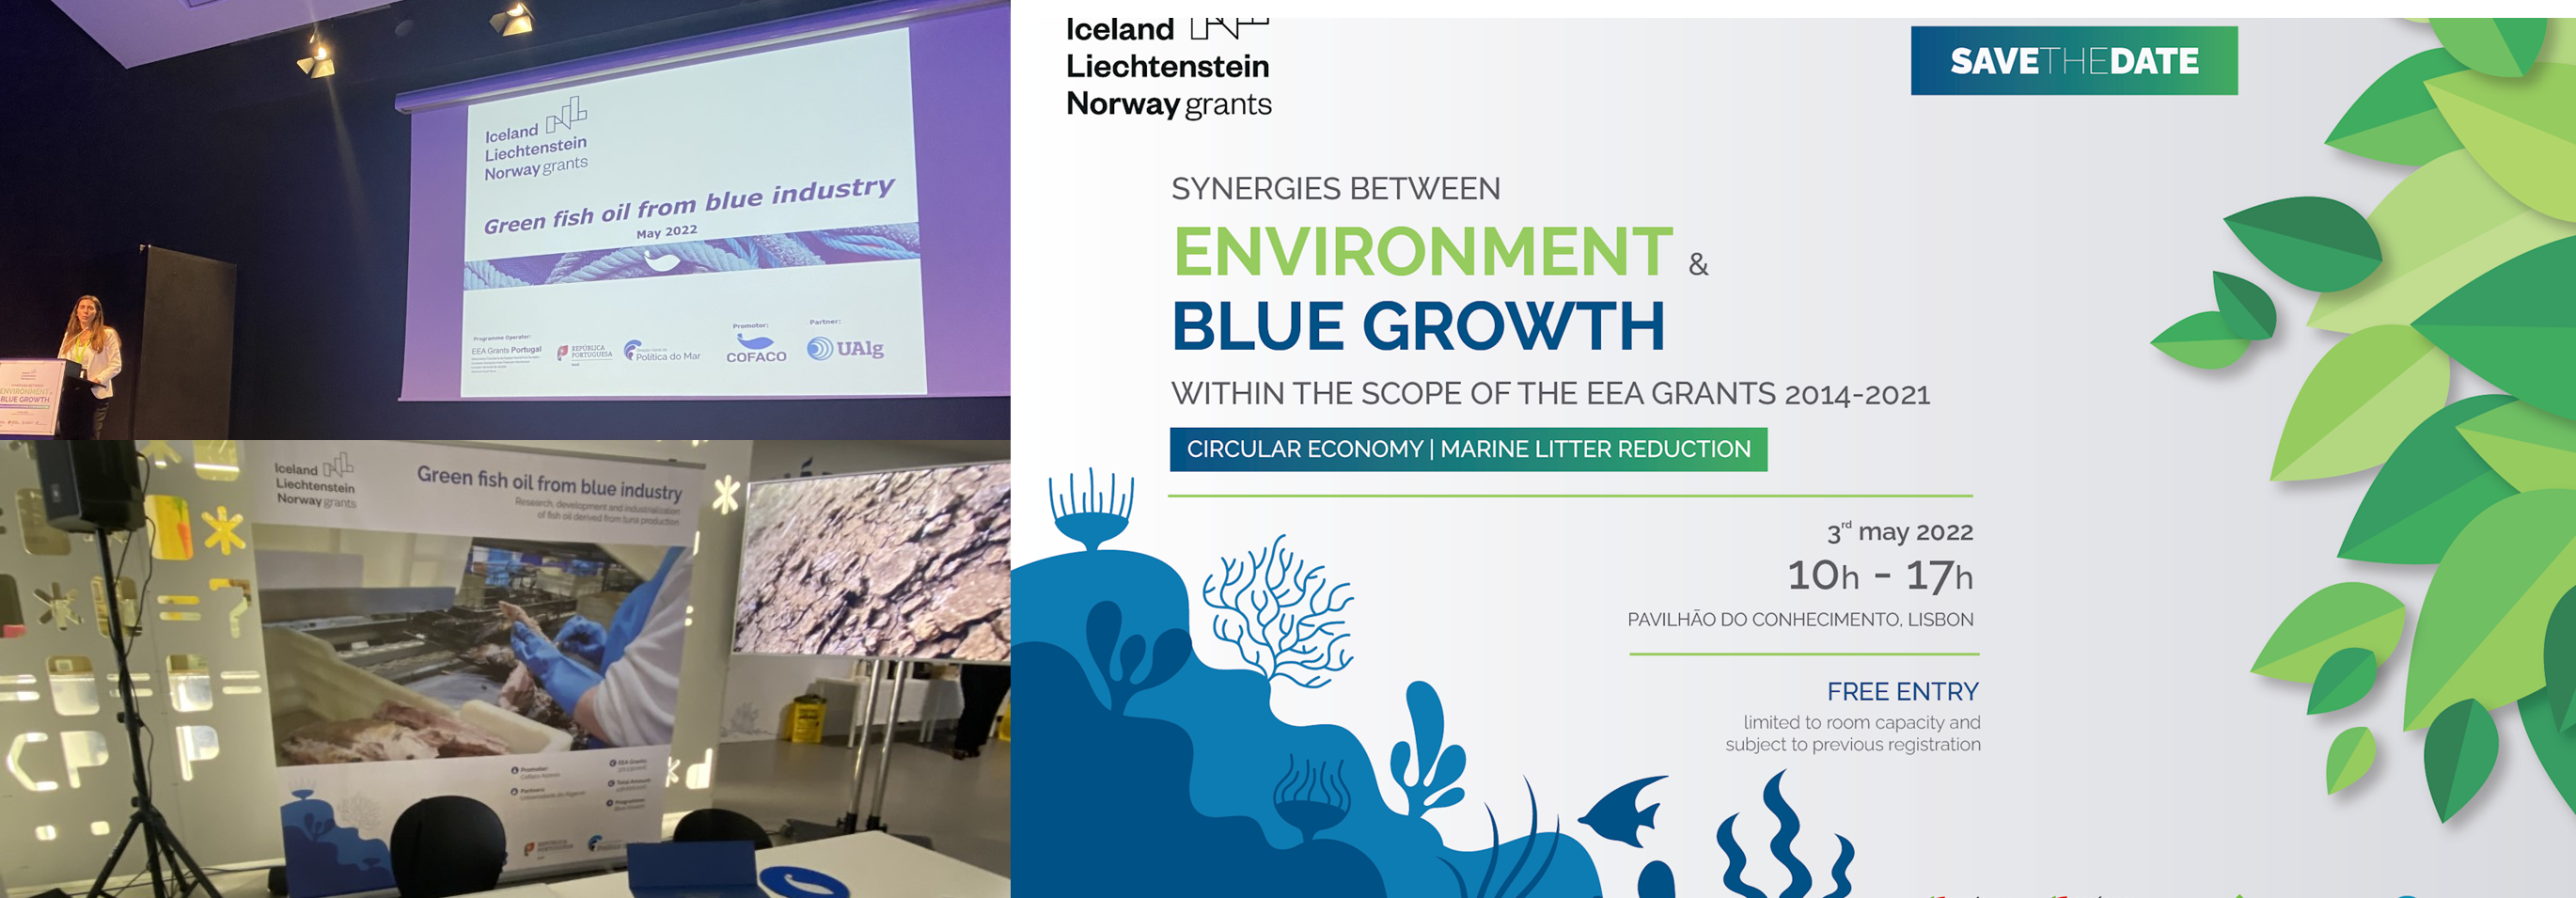 Environment & Blue growth